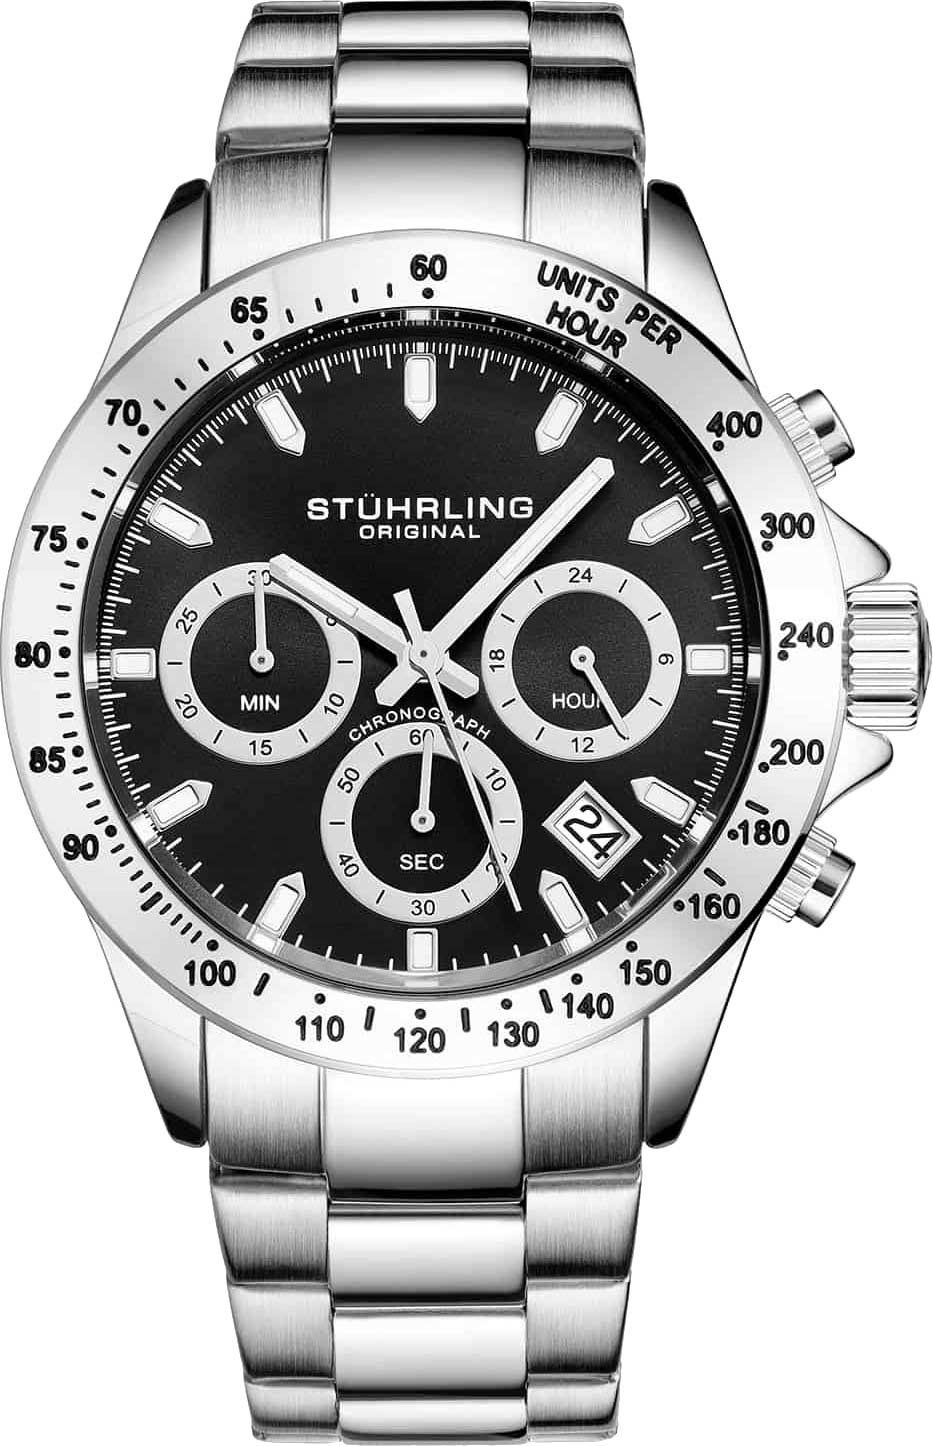 Наручные часы Stuhrling 3960.1 с хронографом